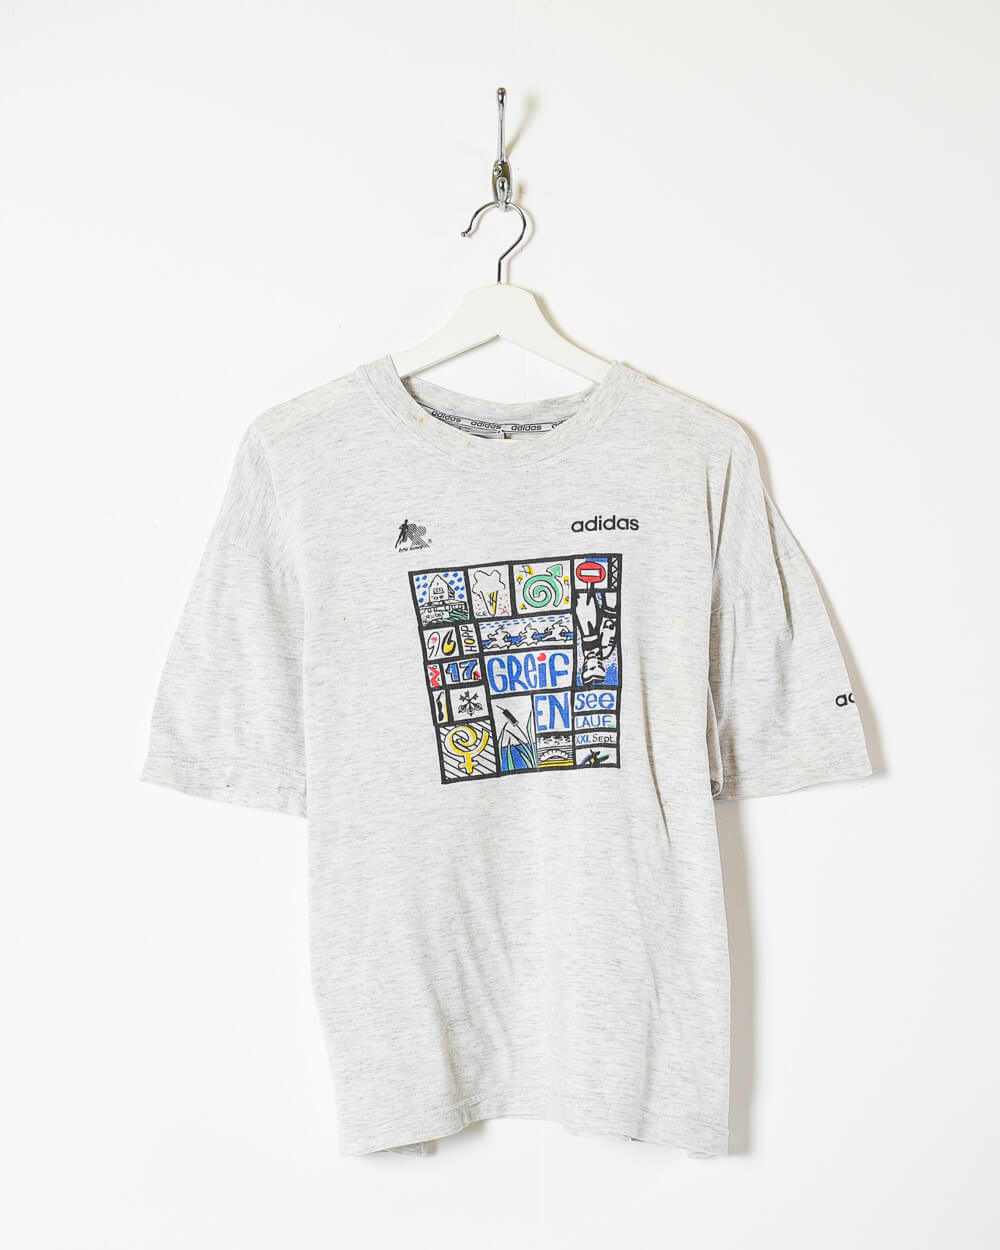 Stone Adidas Grief T-Shirt - Medium